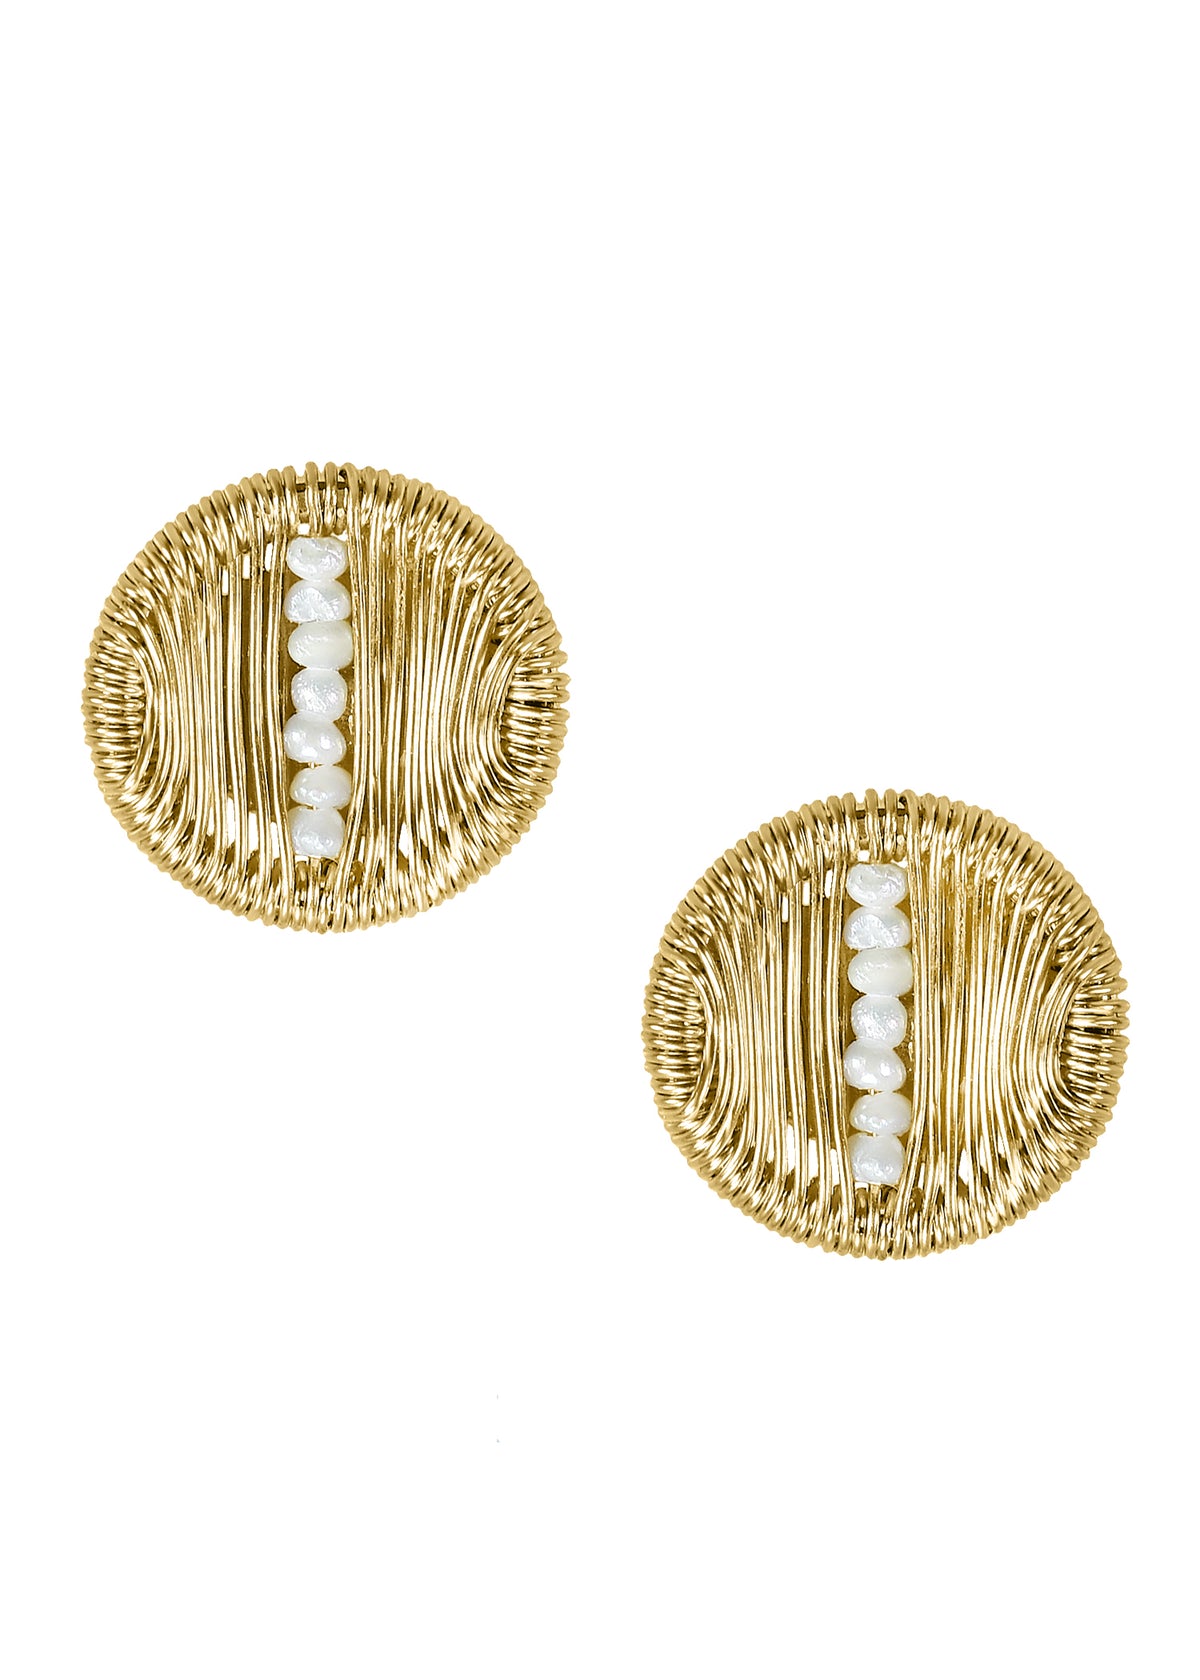 Freshwater pearl 14k gold fill Posts Earrings measure 7/16&quot; in diameter Handmade in our Los Angeles studio